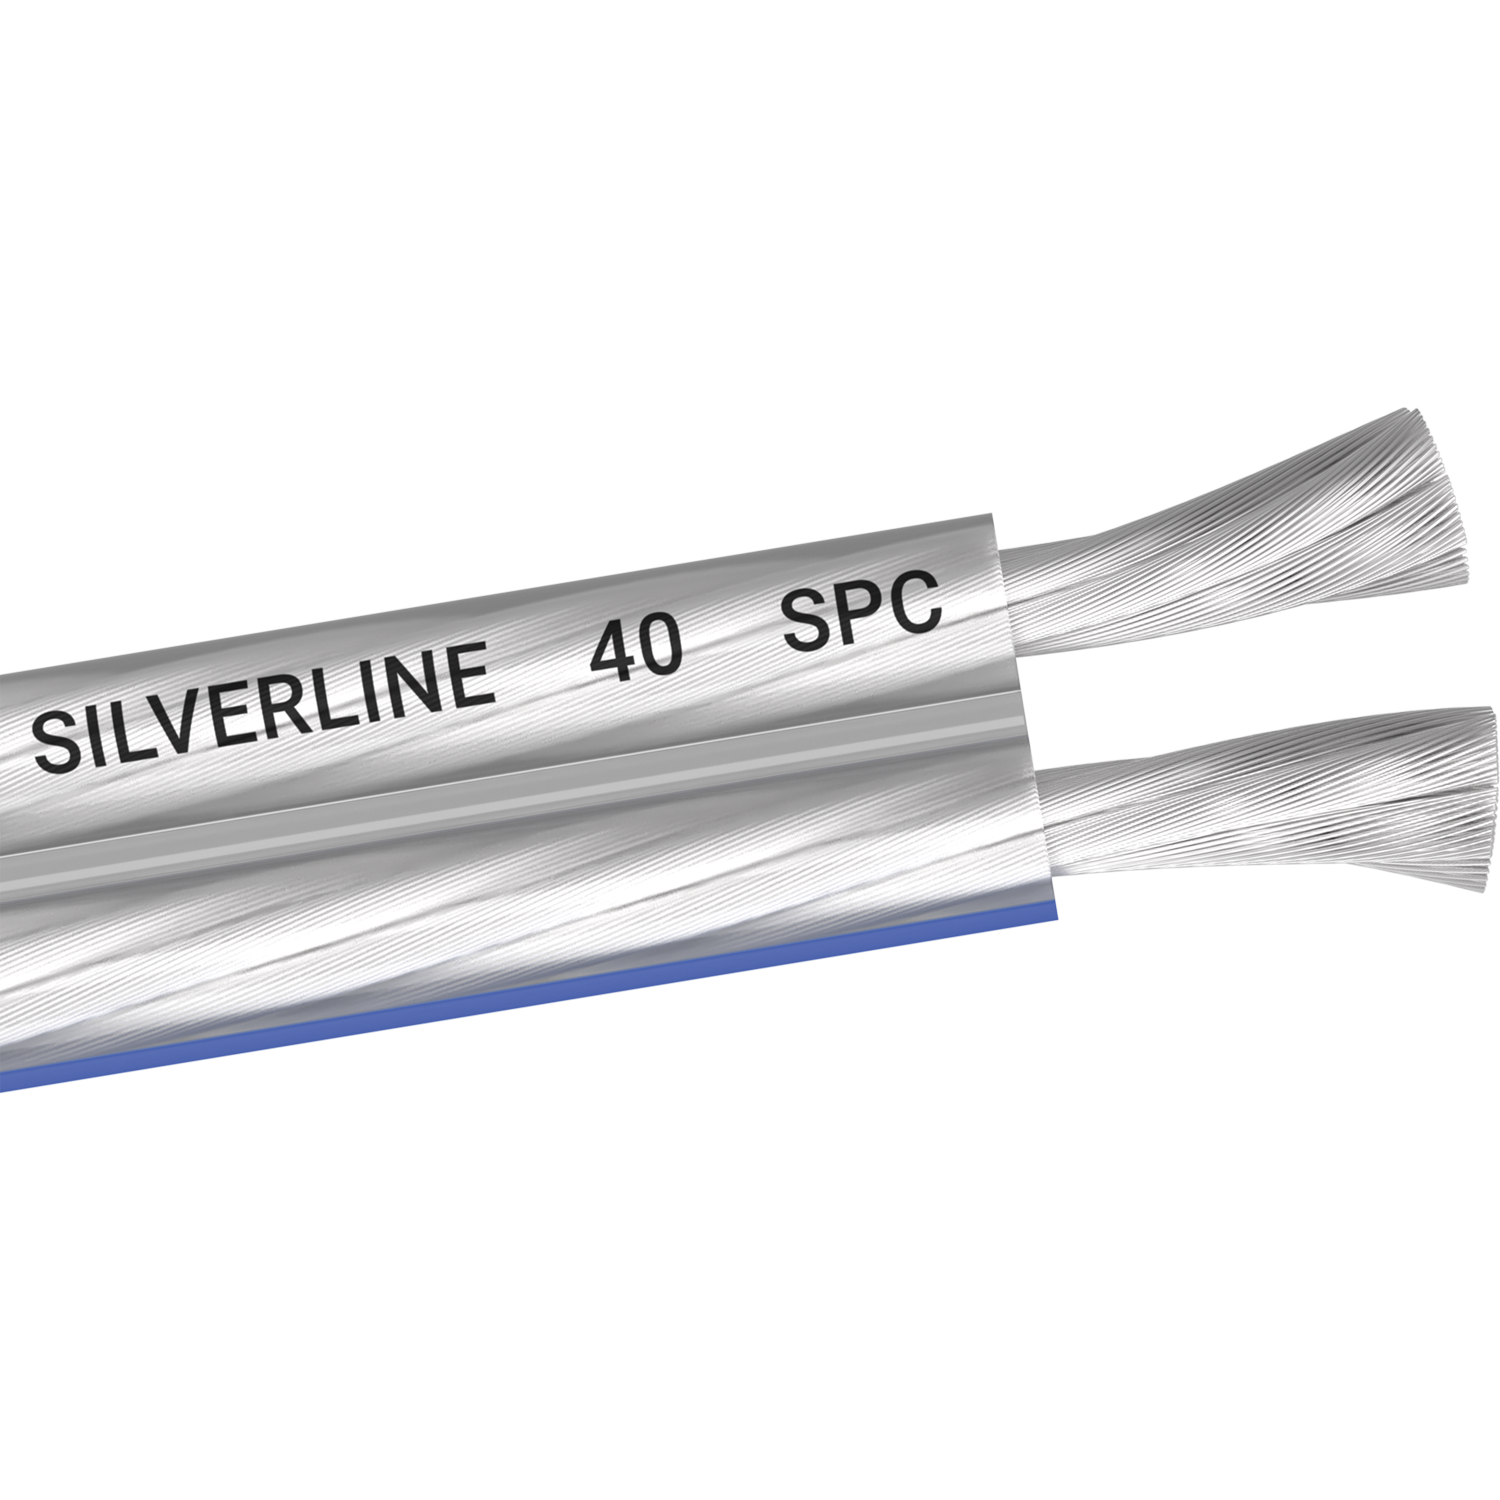 Silverline SP-40